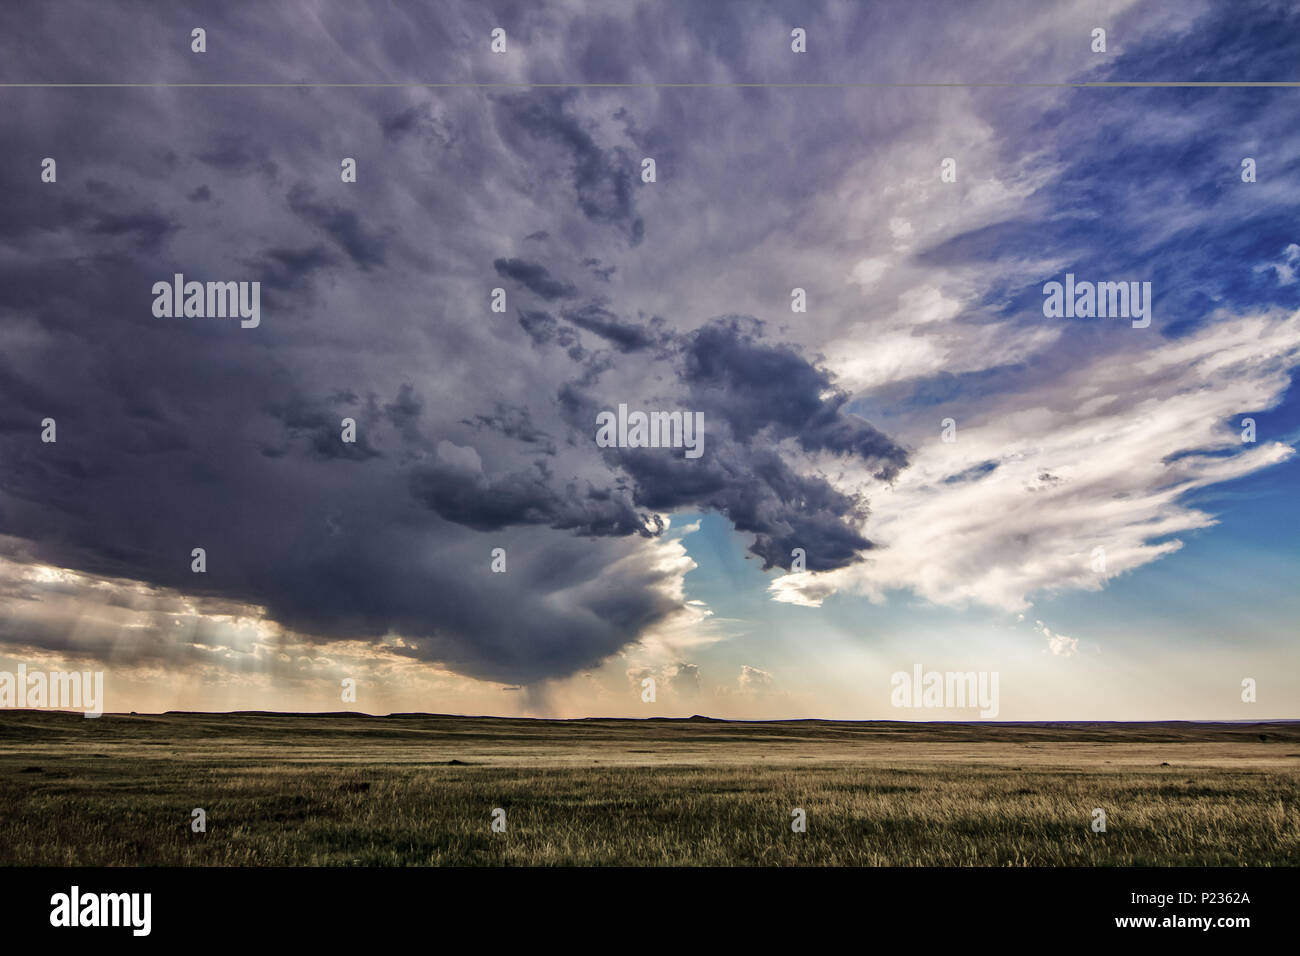 The USA, South Dakota, Badlands National Park, cloud formation Stock Photo